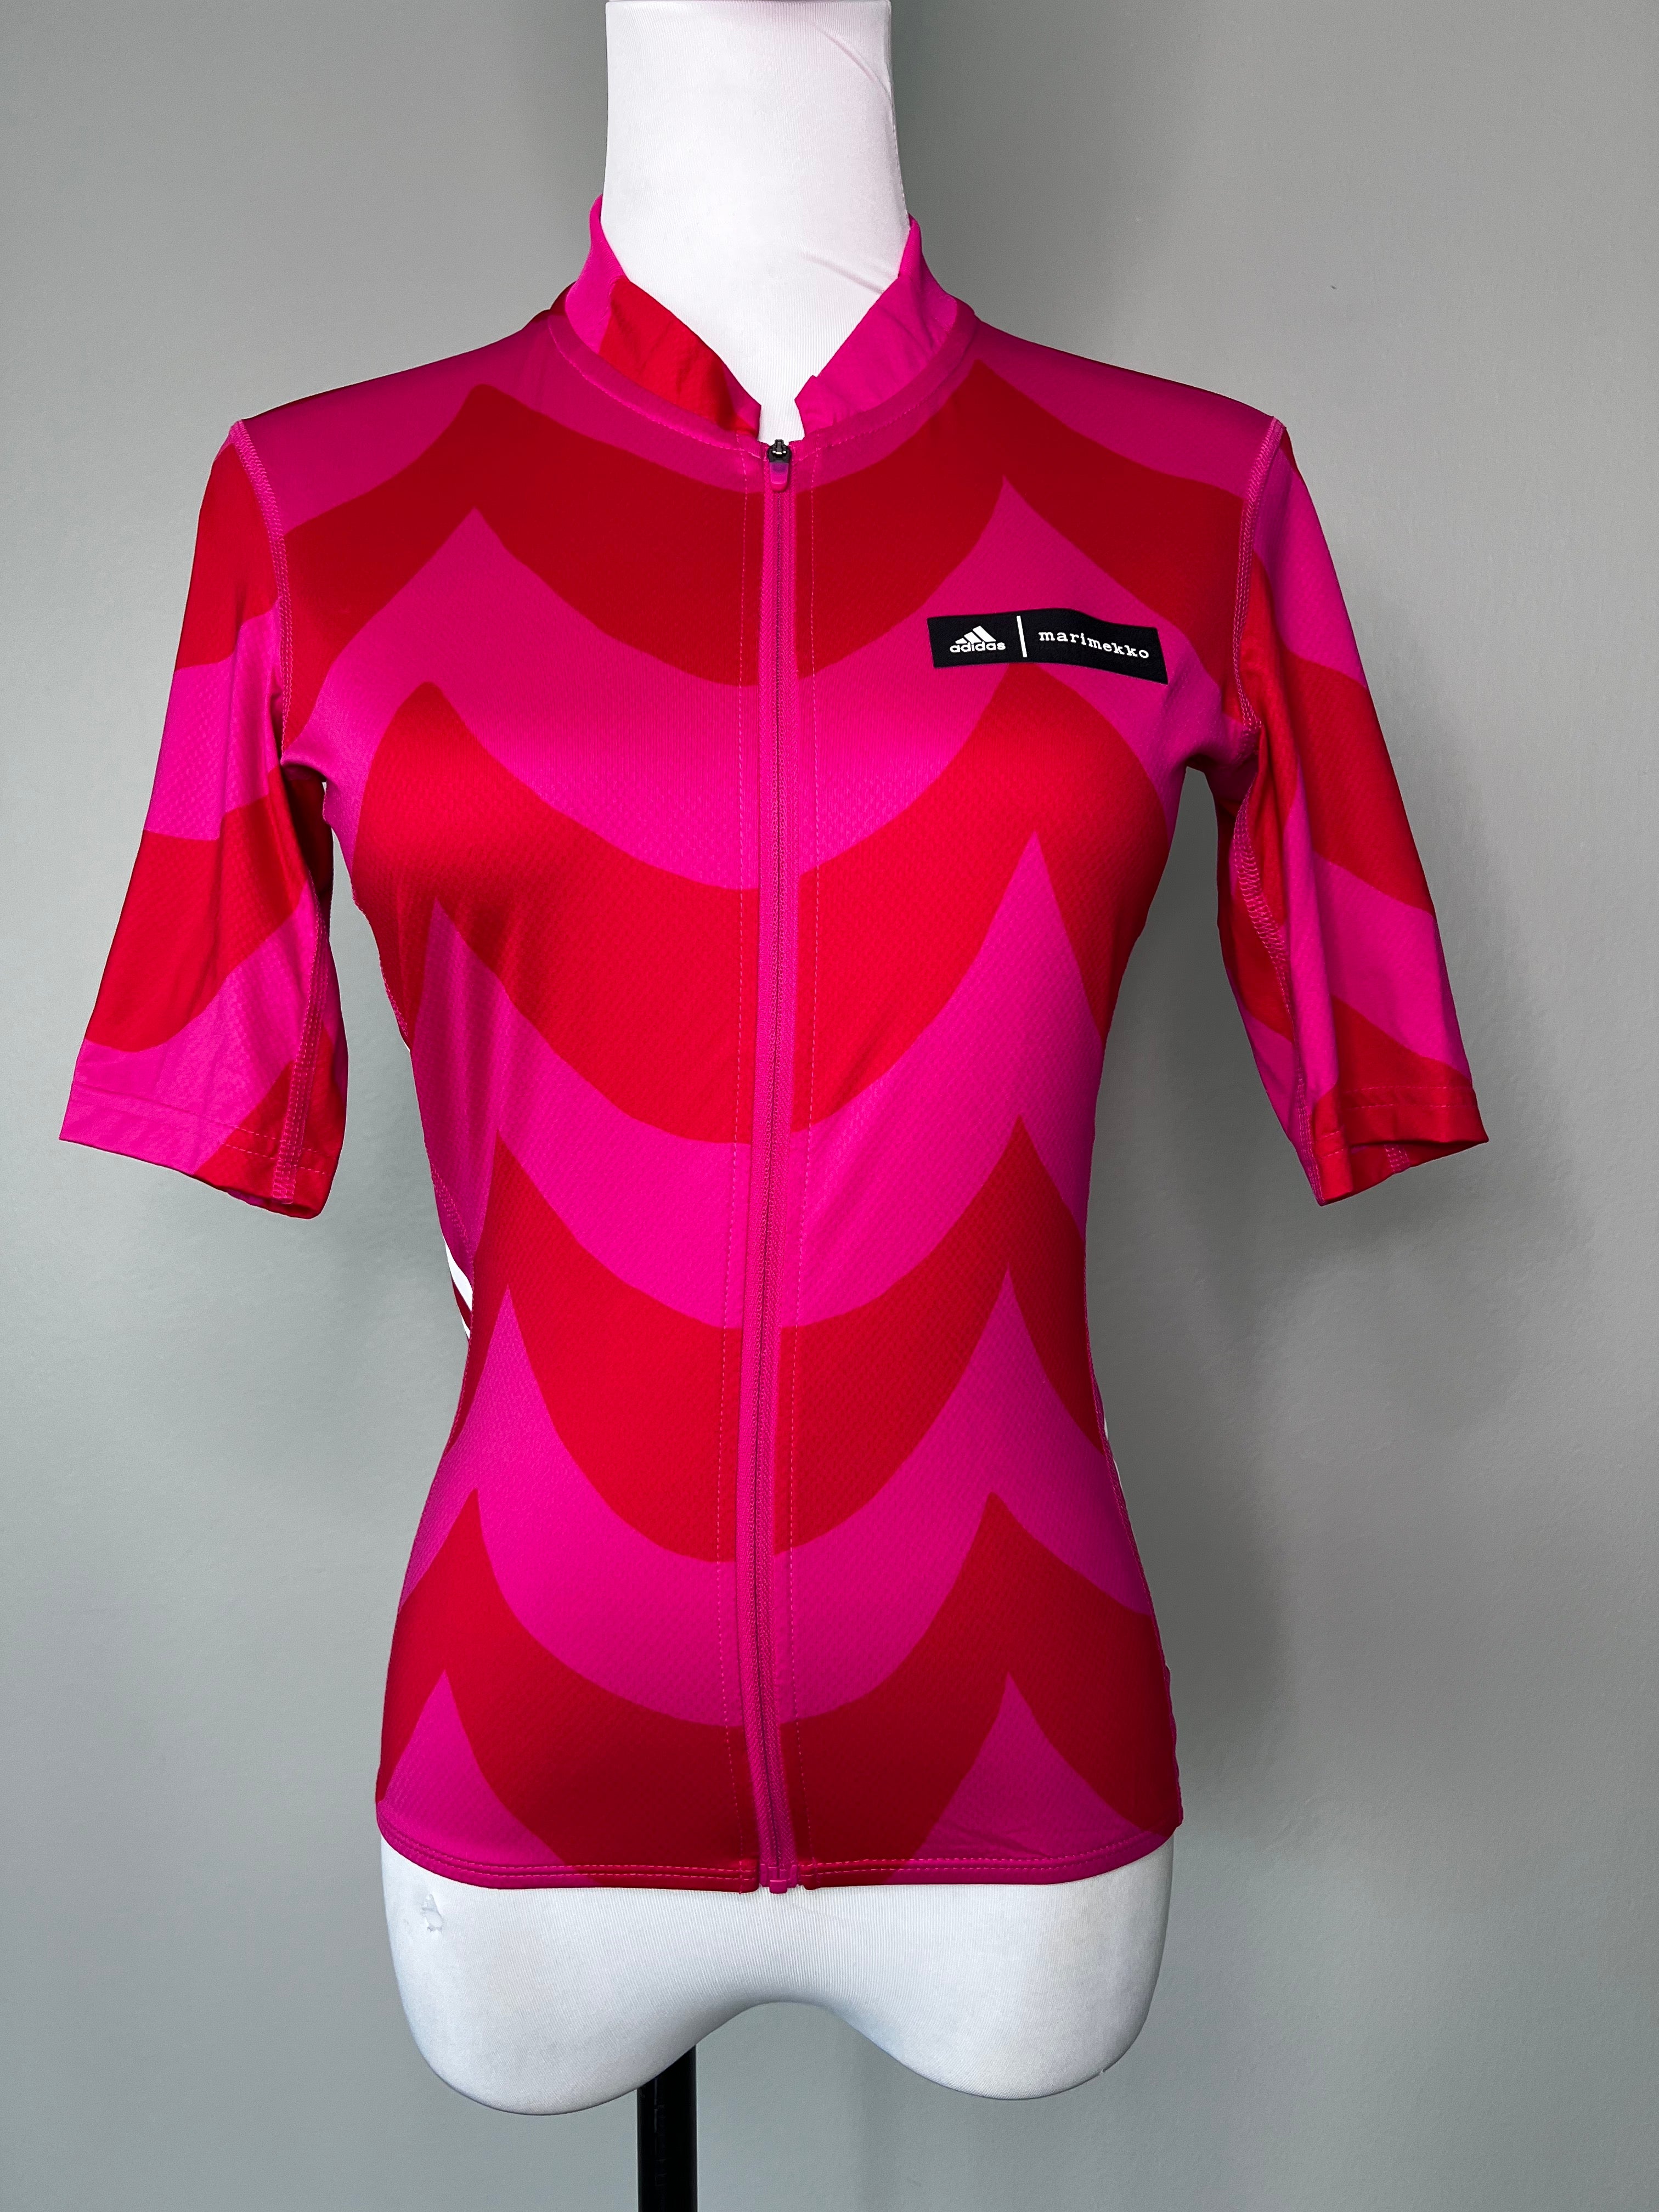 BRAND NEW ! Fucia pink marimekko Grpahic cycling  Top - ADIDAS